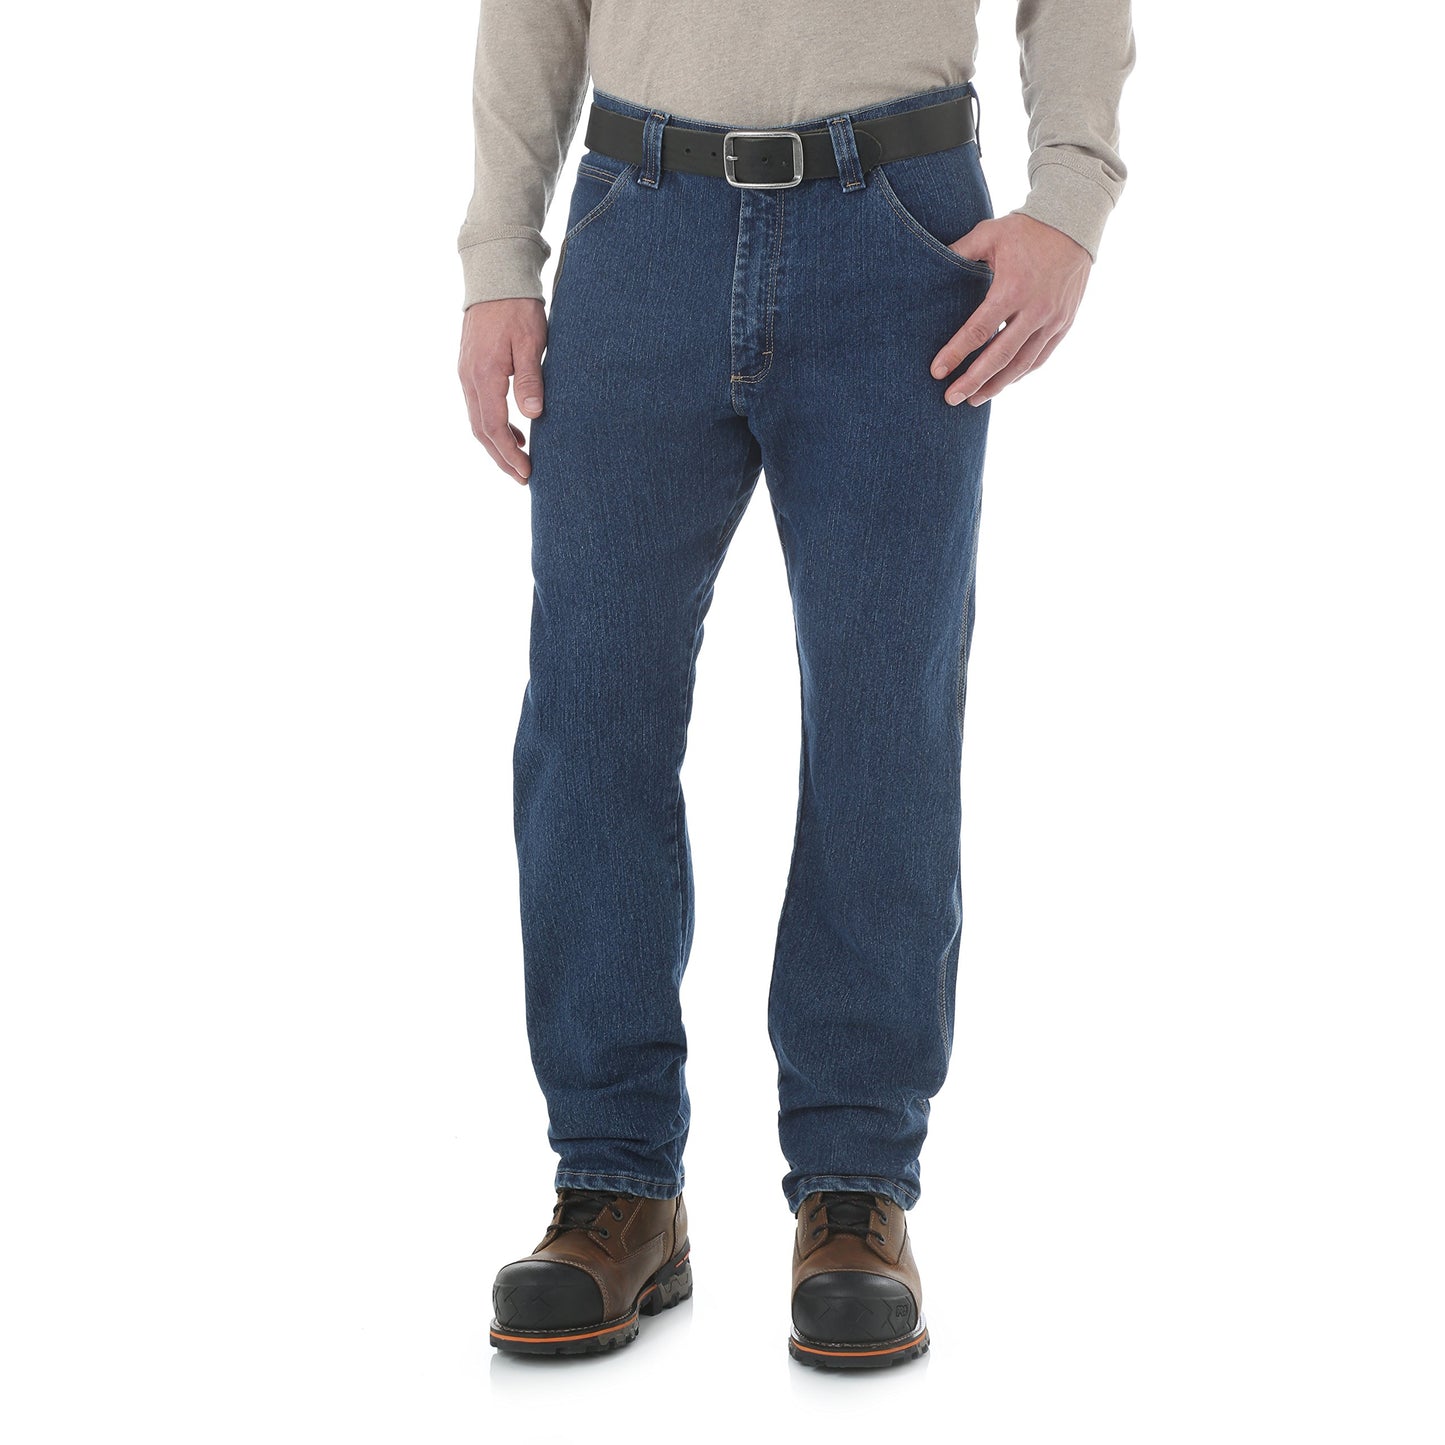 Wrangler Riggs Workwear Men's Advanced Comfort Five Pocket Jean, mid stone, 42x30